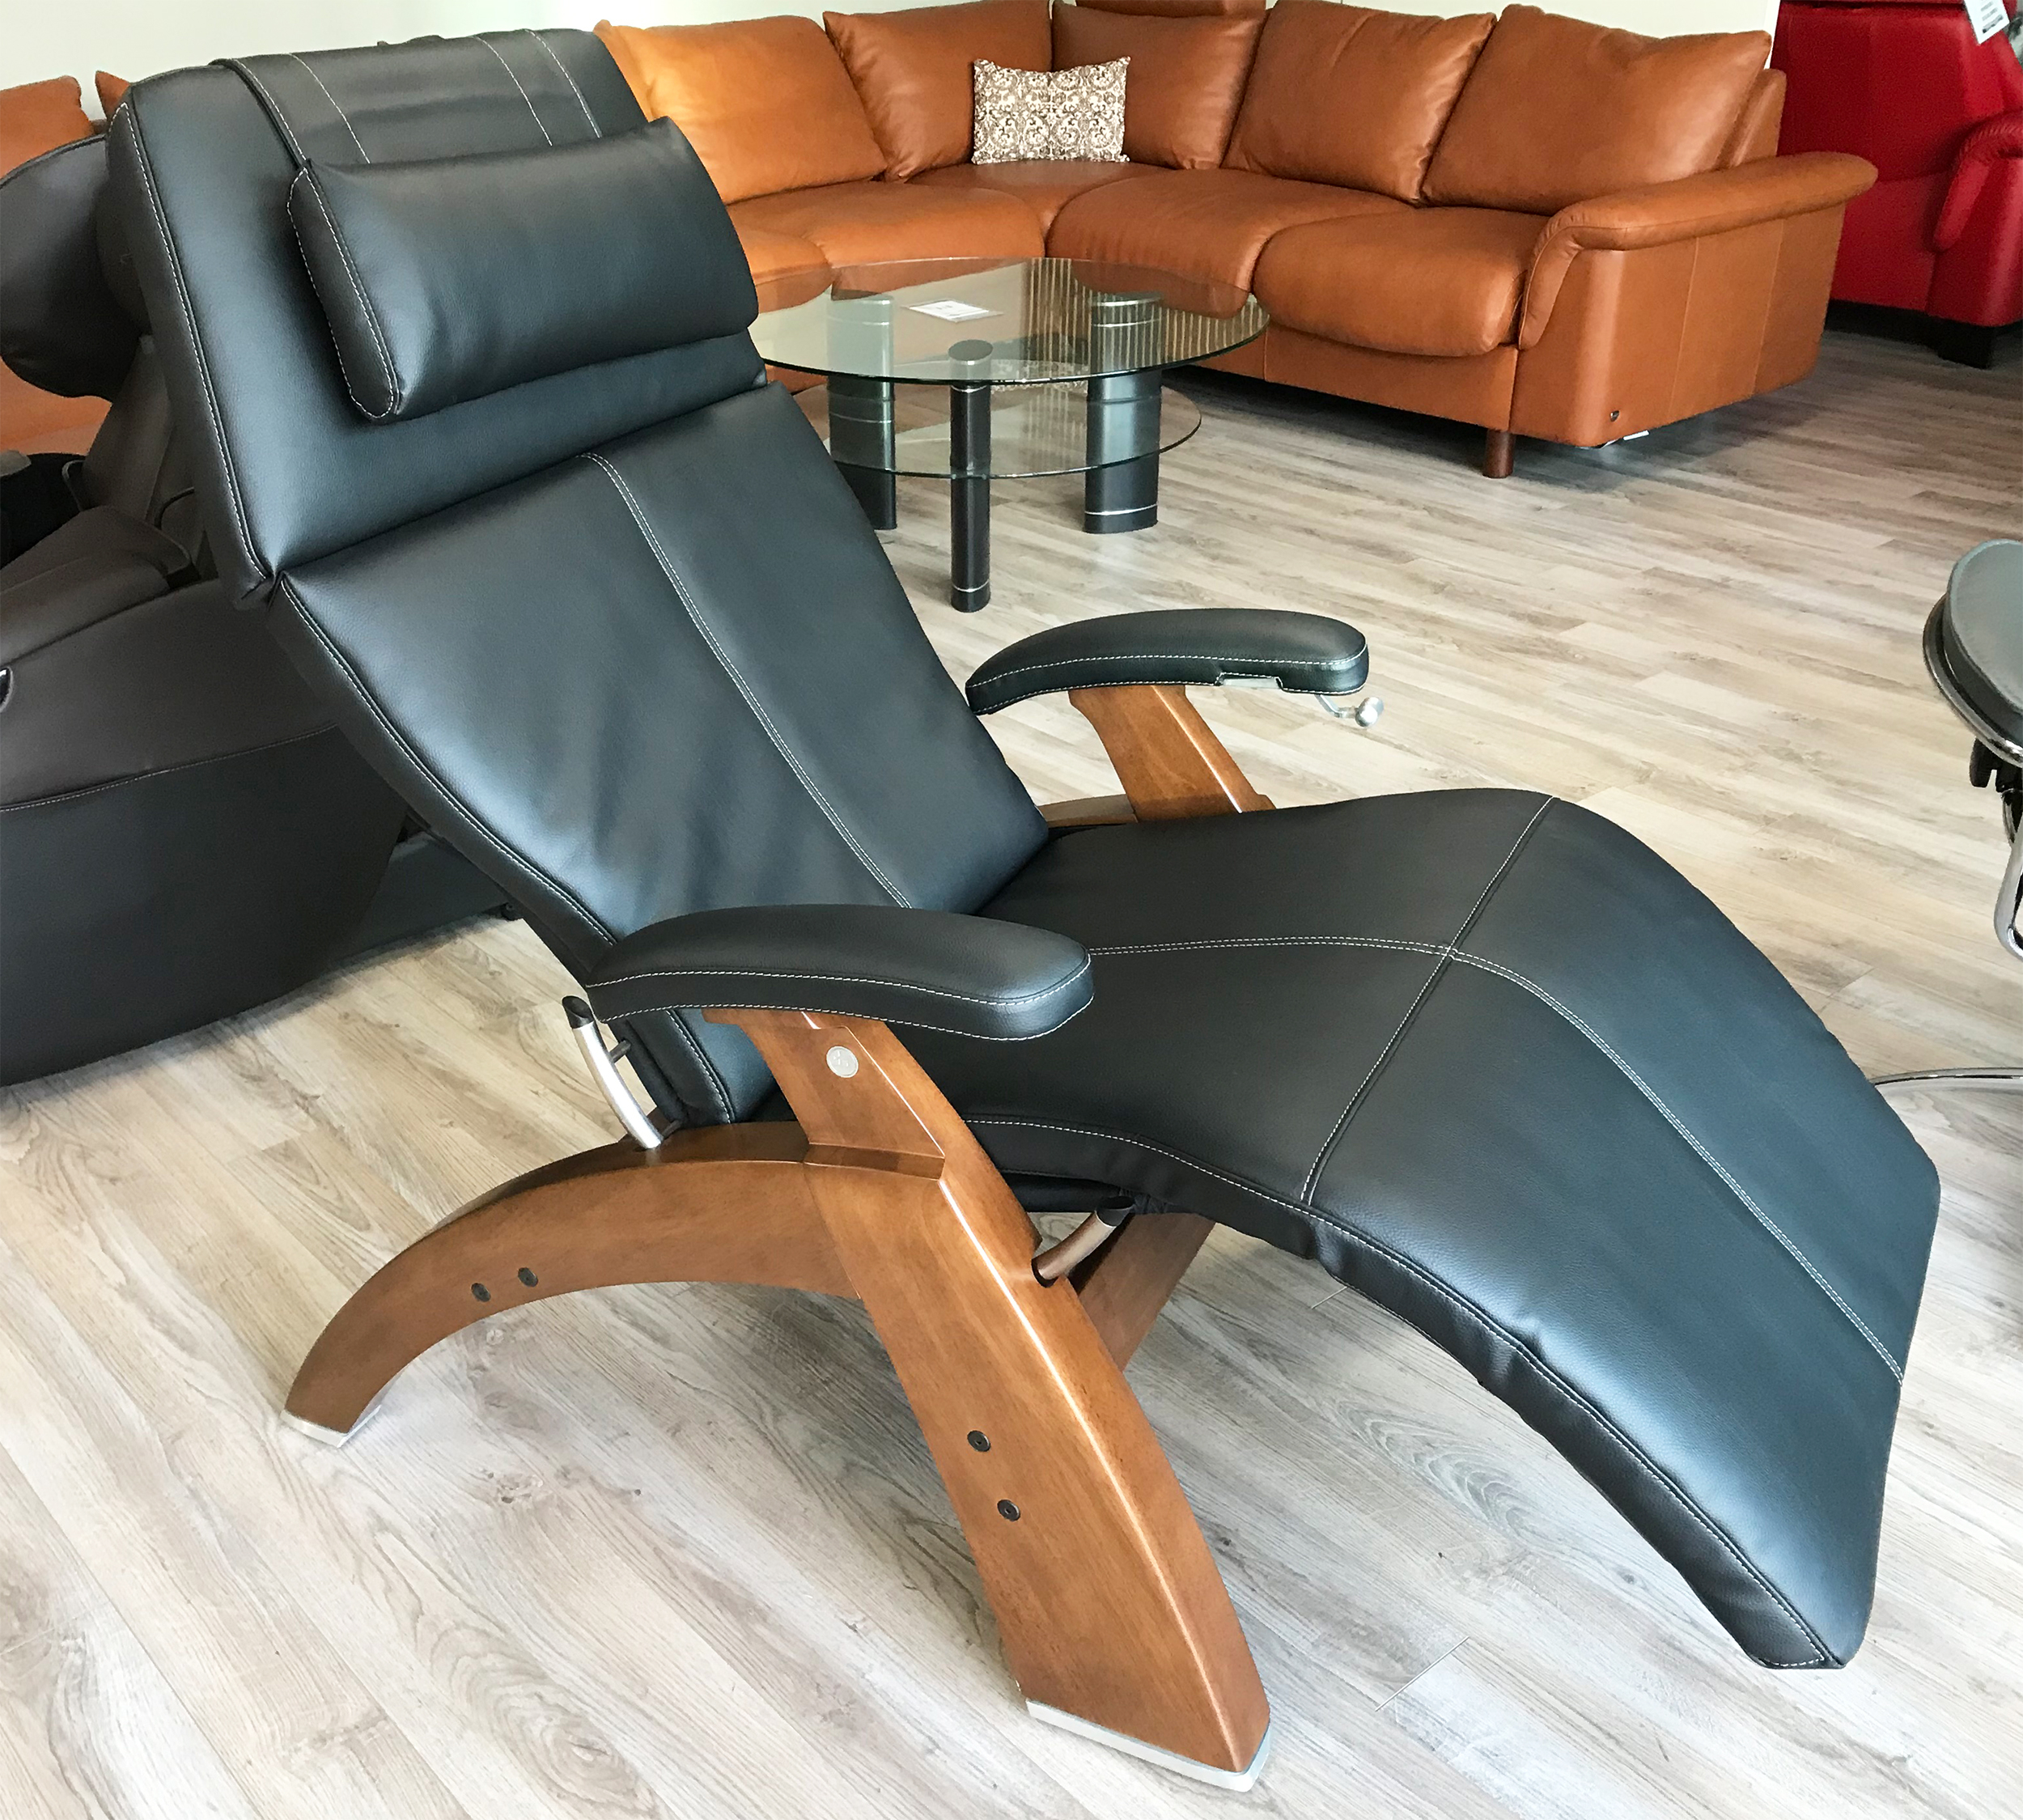 https://www.vitalitywebb.com/Human-Touch-Perfect-Chair-Recliner/images/Human-Touch-PC-420-Perfect-Chair-Recliner-Black-Top-Grain-Leather-Walnut-Wood-6.jpg